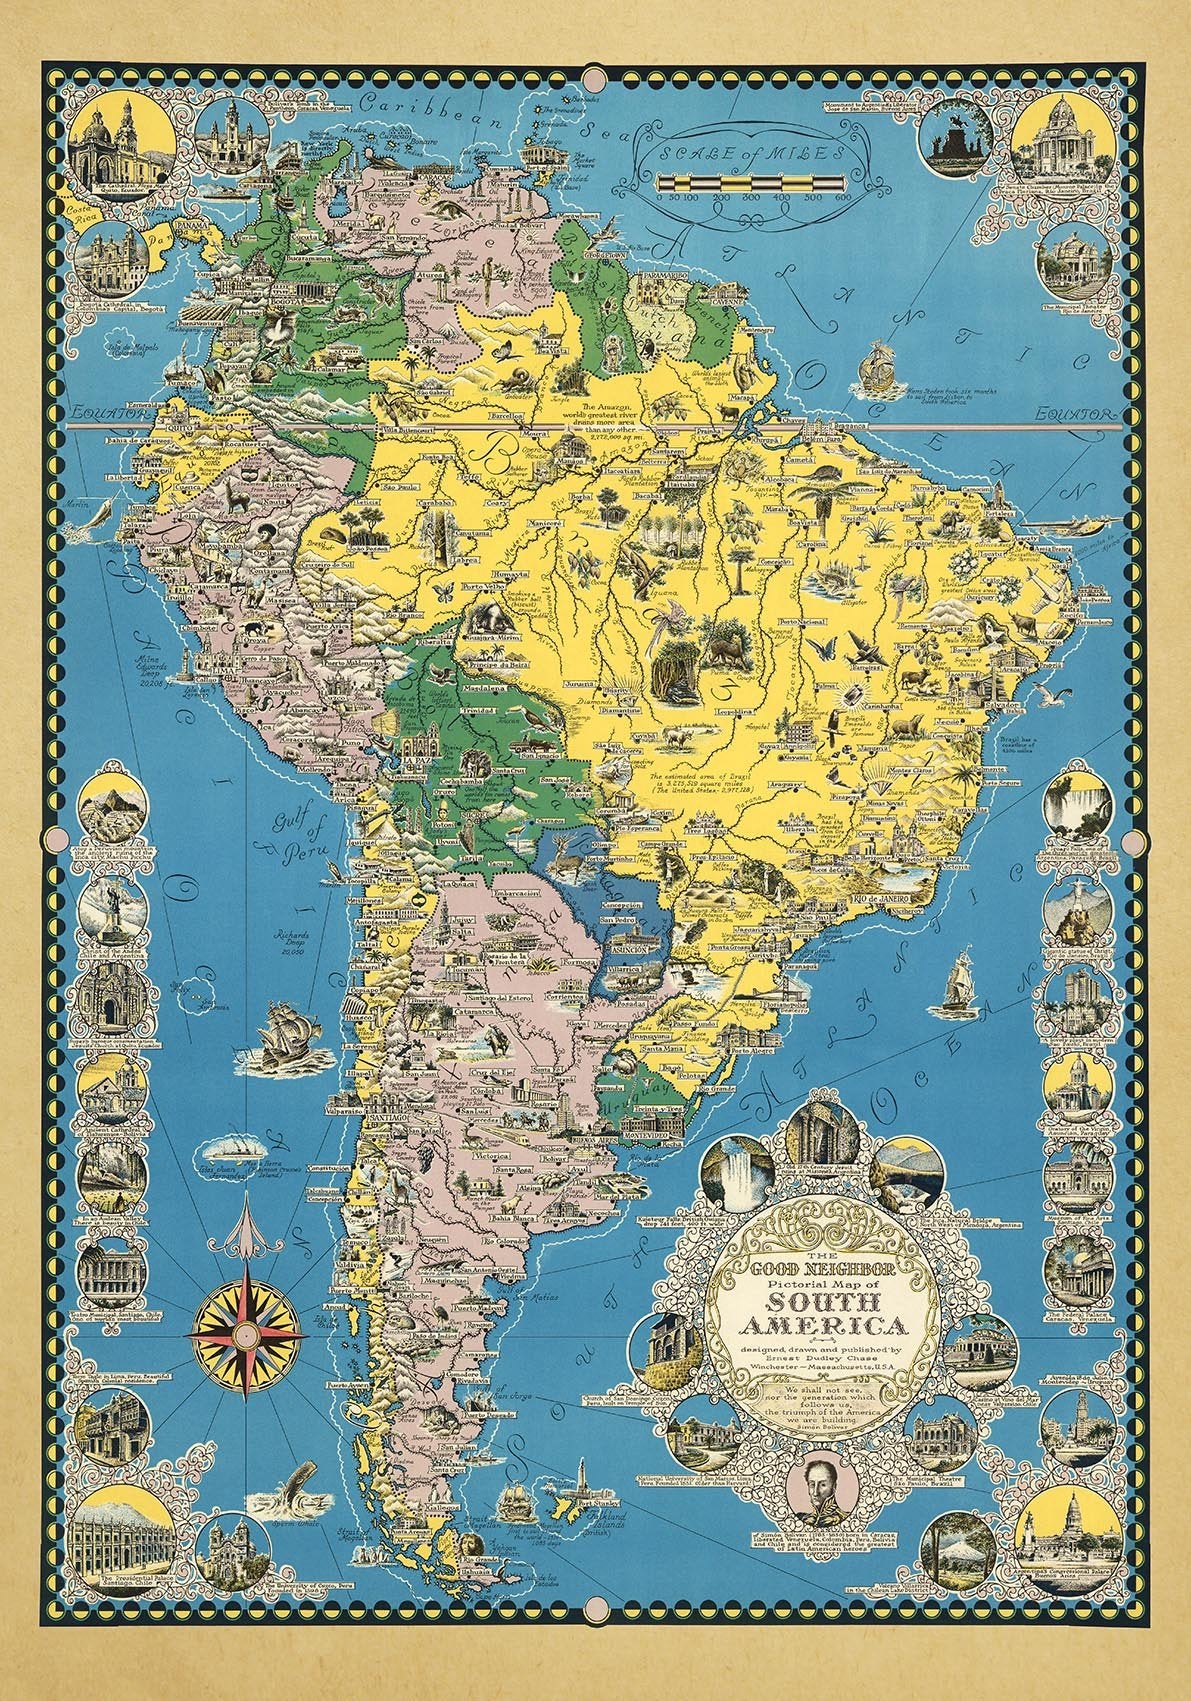 Good Neighbor - Map of South America